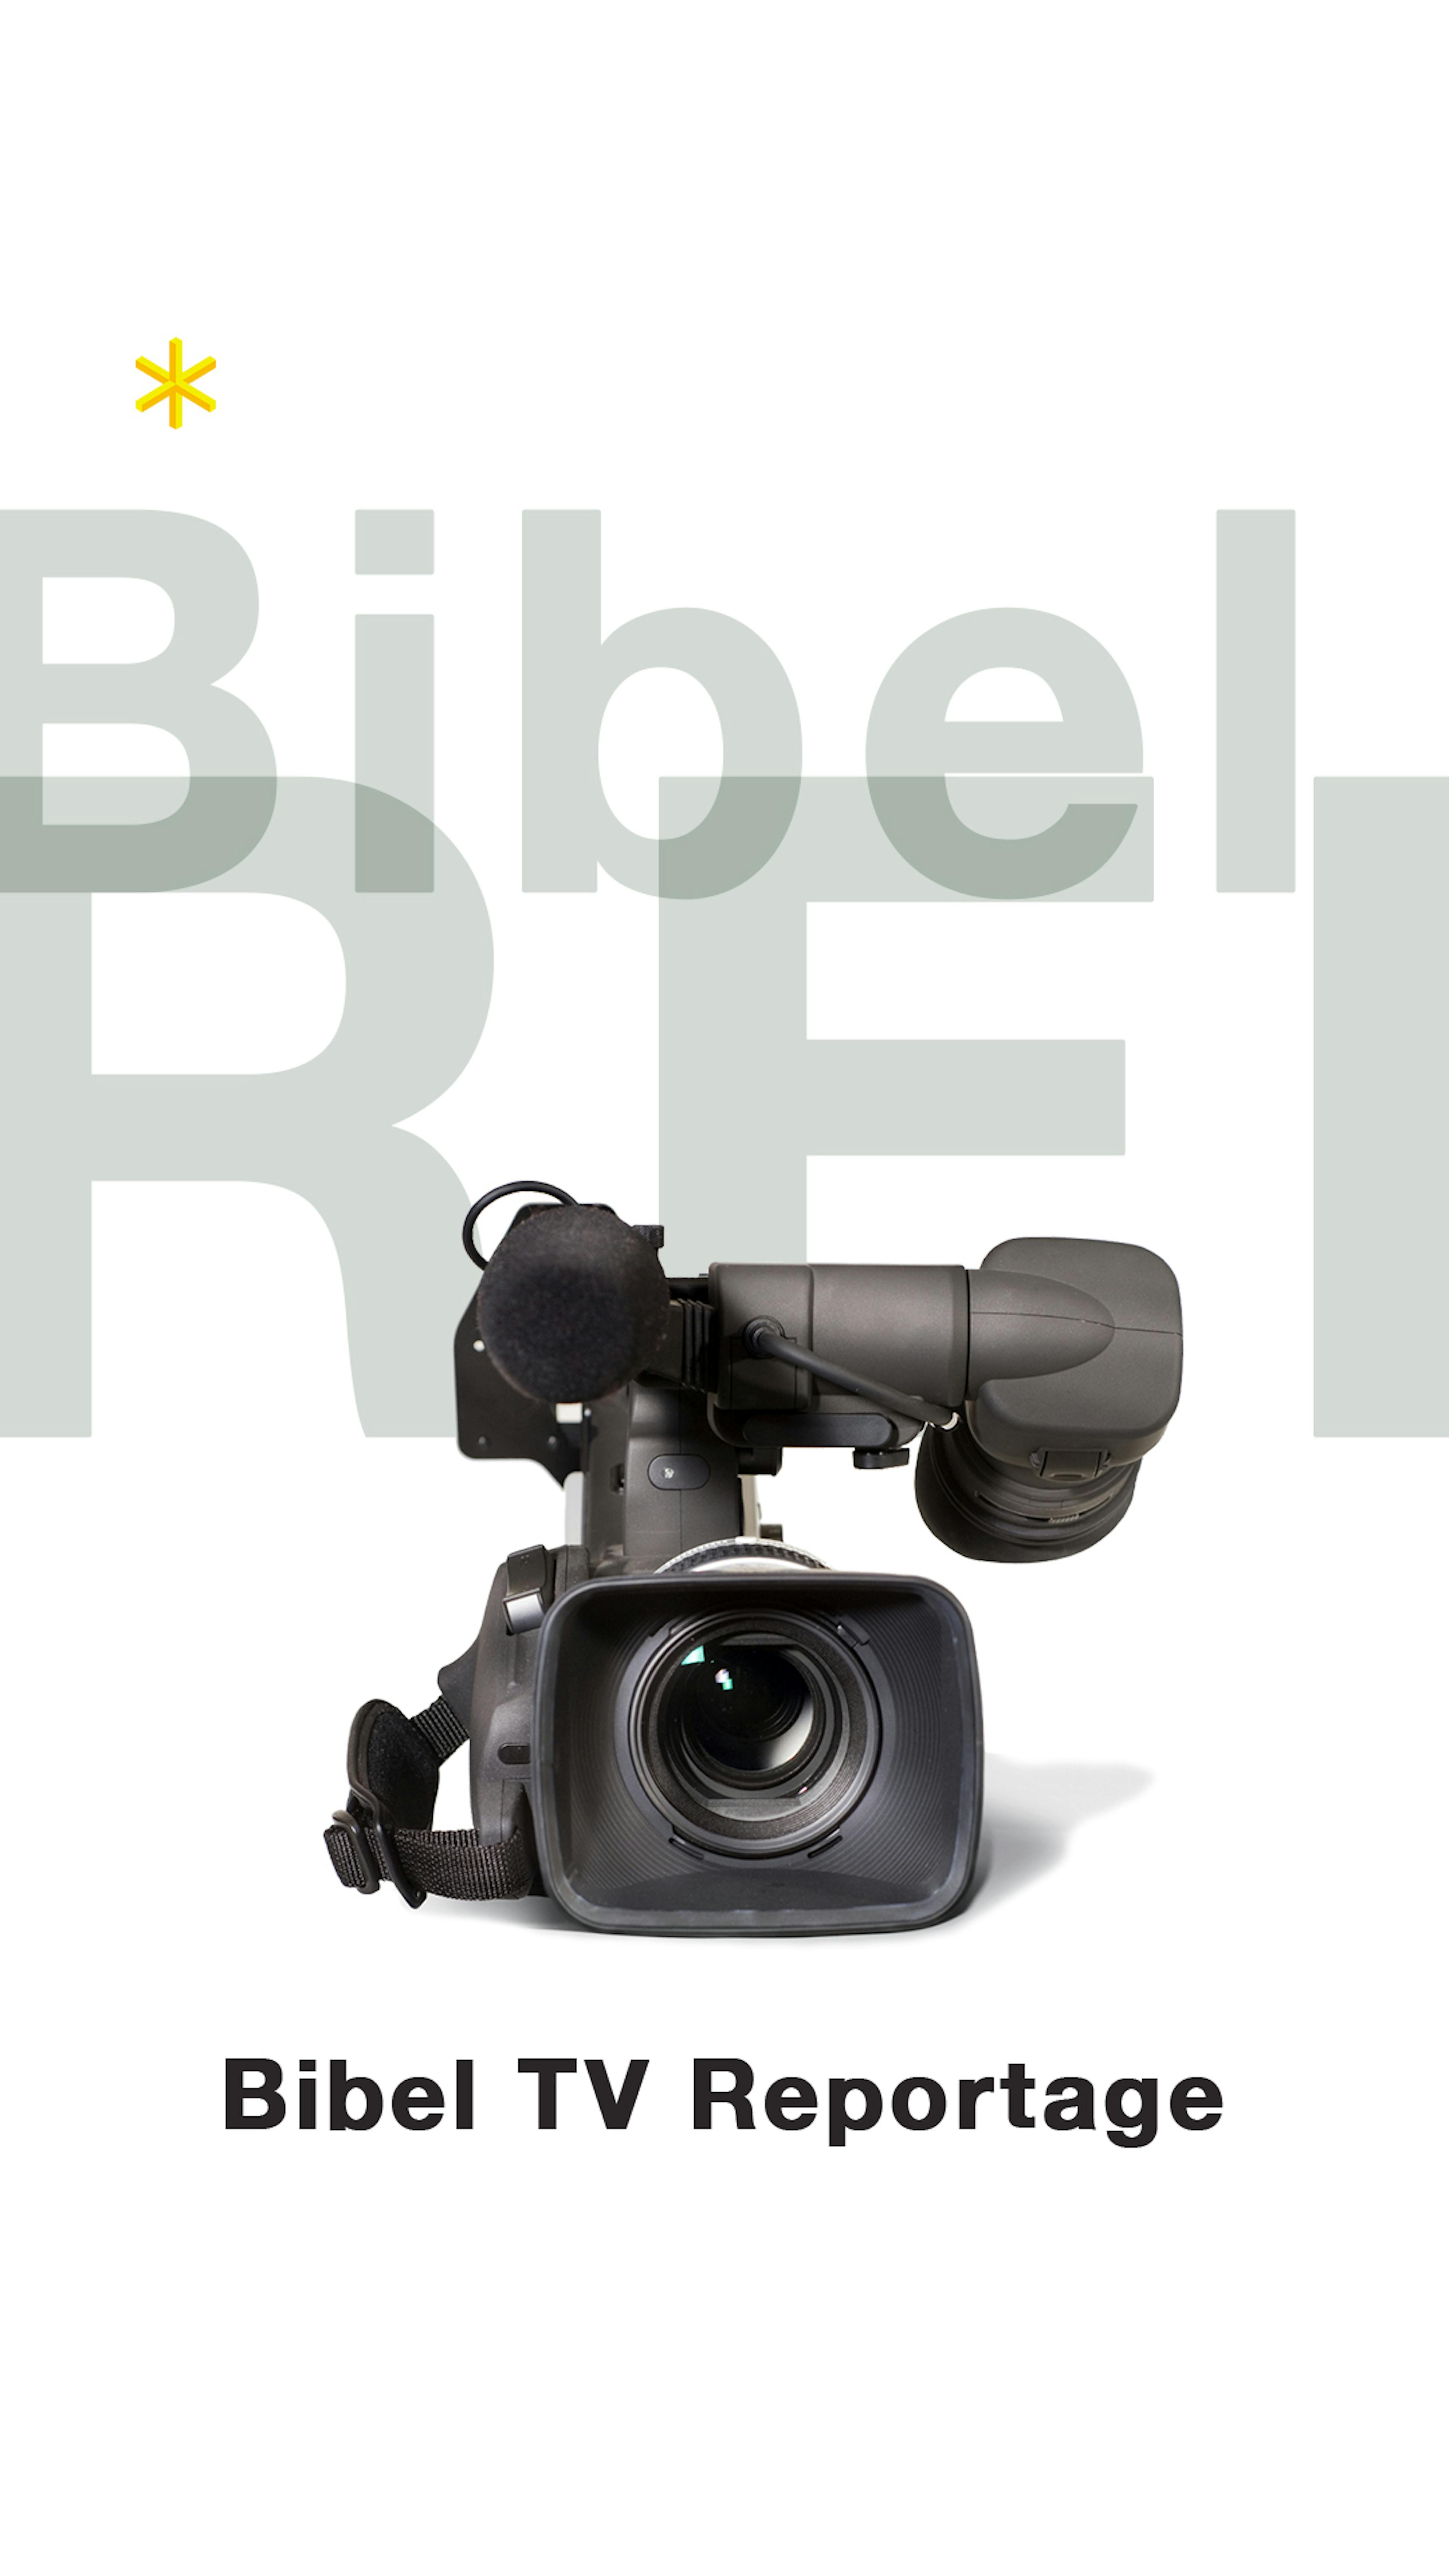 Bibel TV Reportage